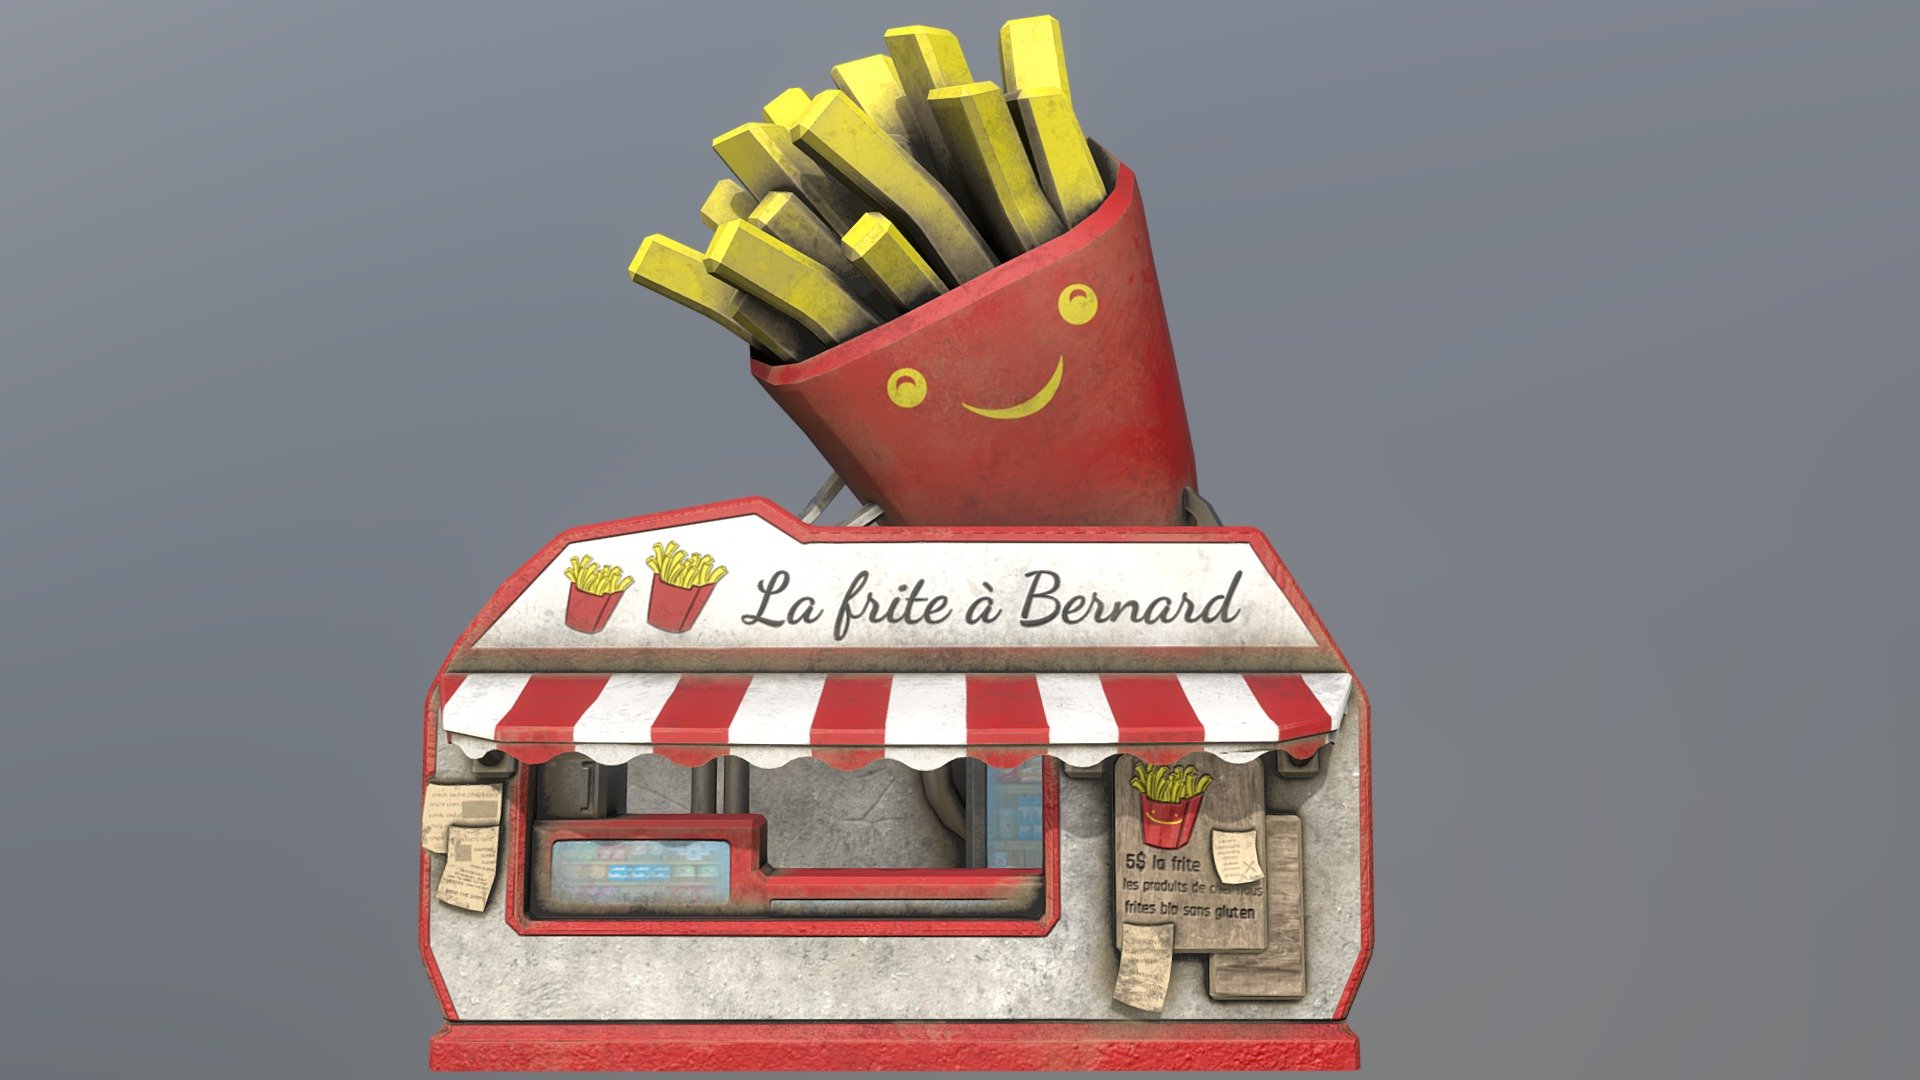 French fries shop: La frite à bernard